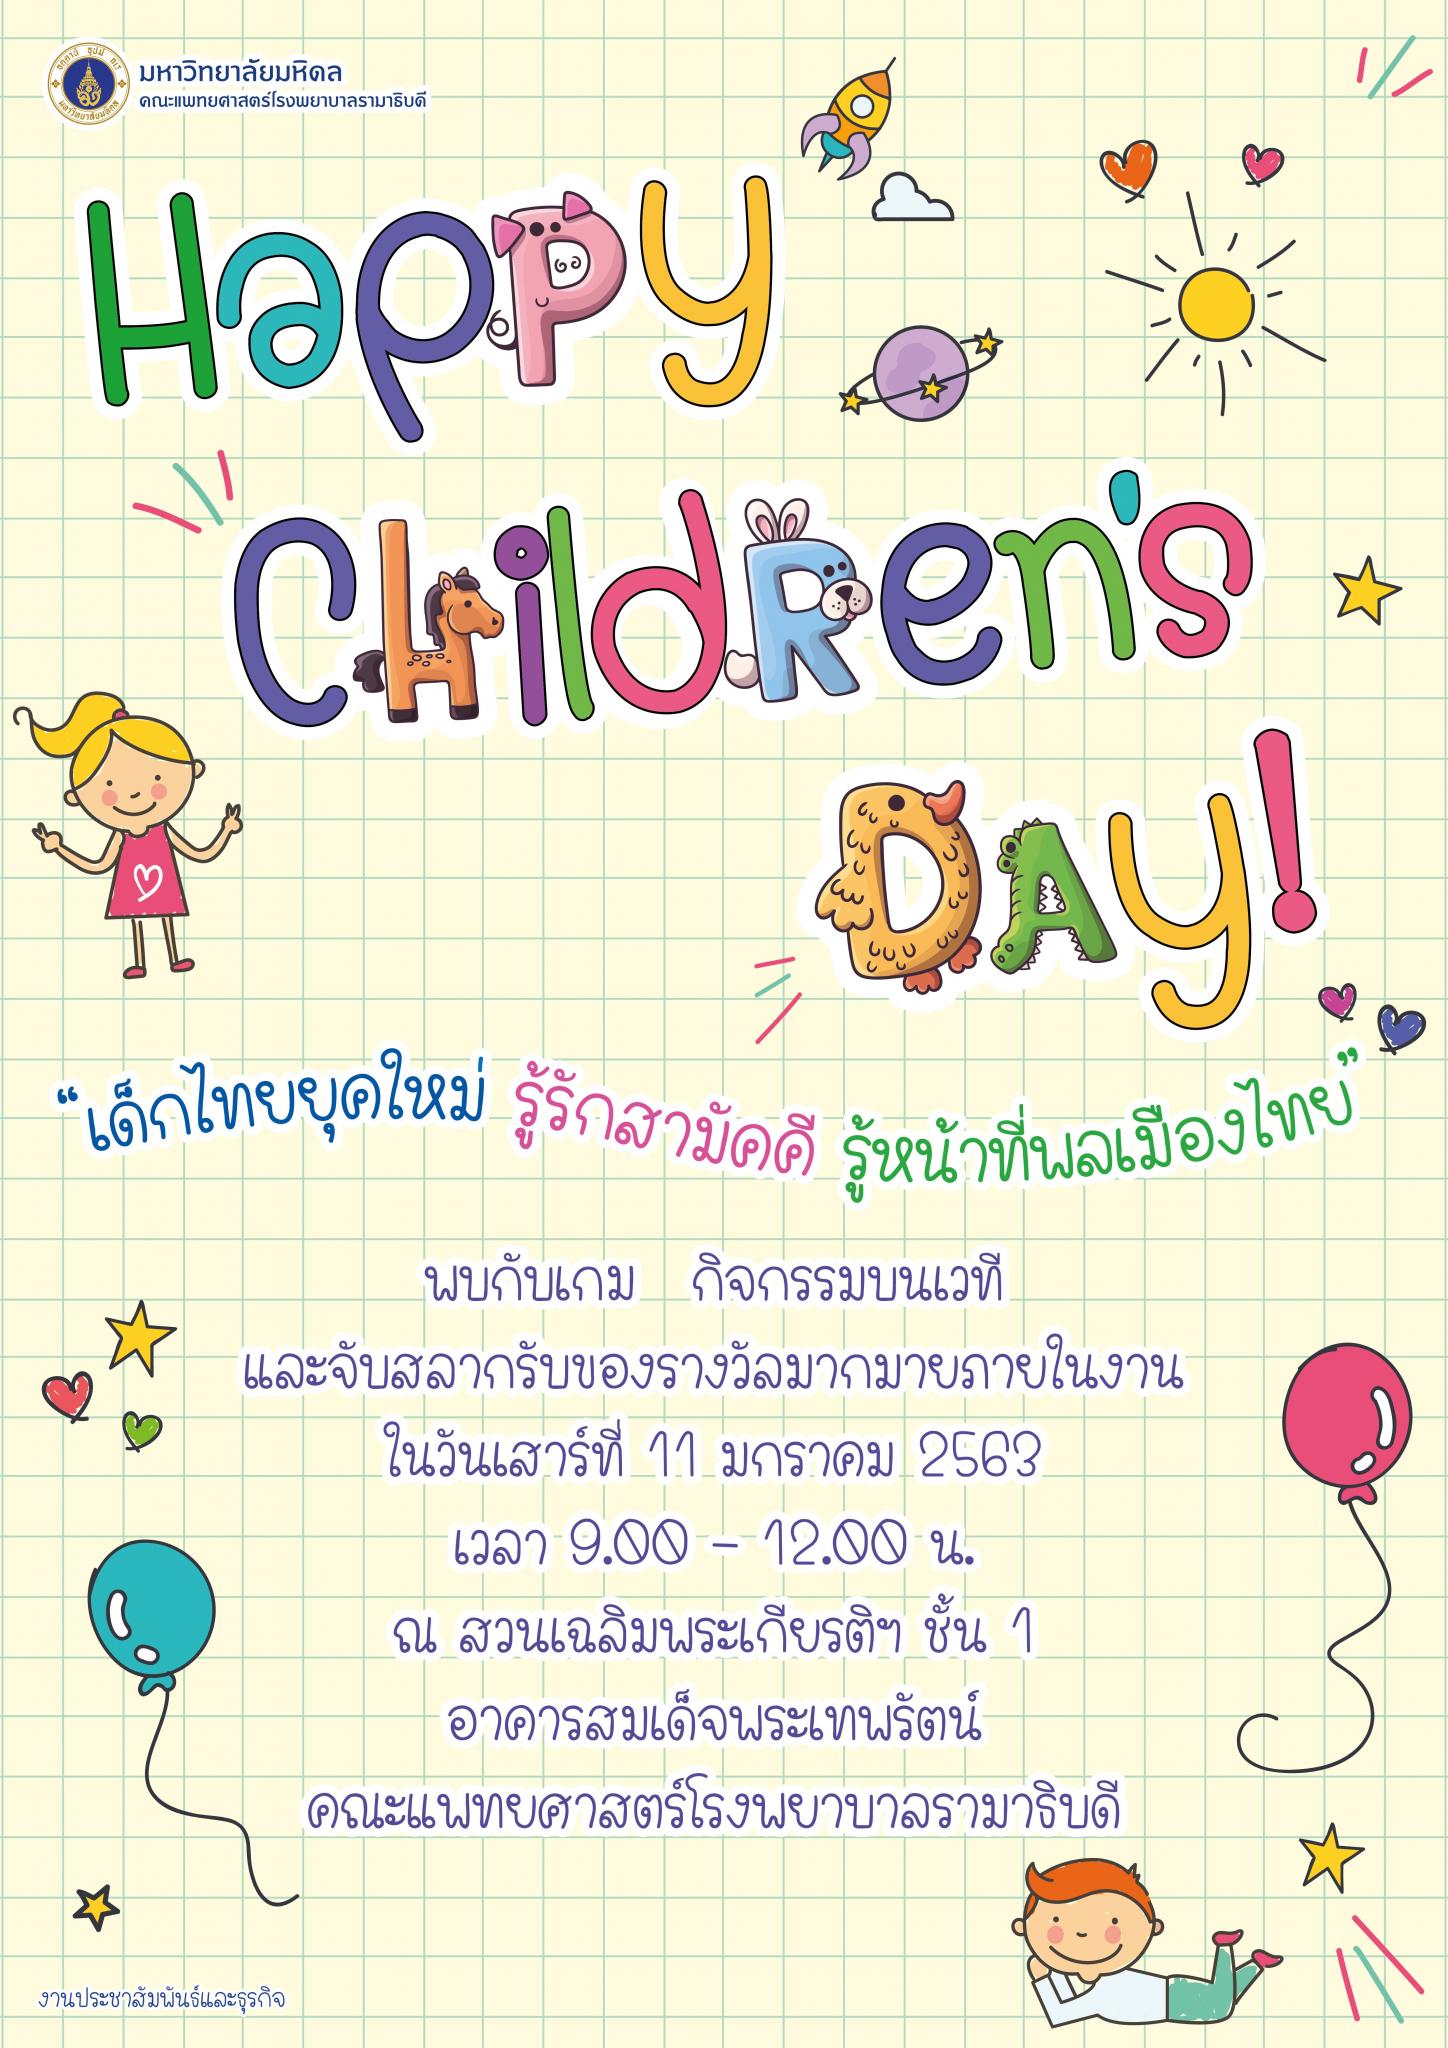 Happy Children's Day "เด็กไทยยุคใหม่ รู้รักสามัคคี รู้หน้าที่พลเมืองไทย"